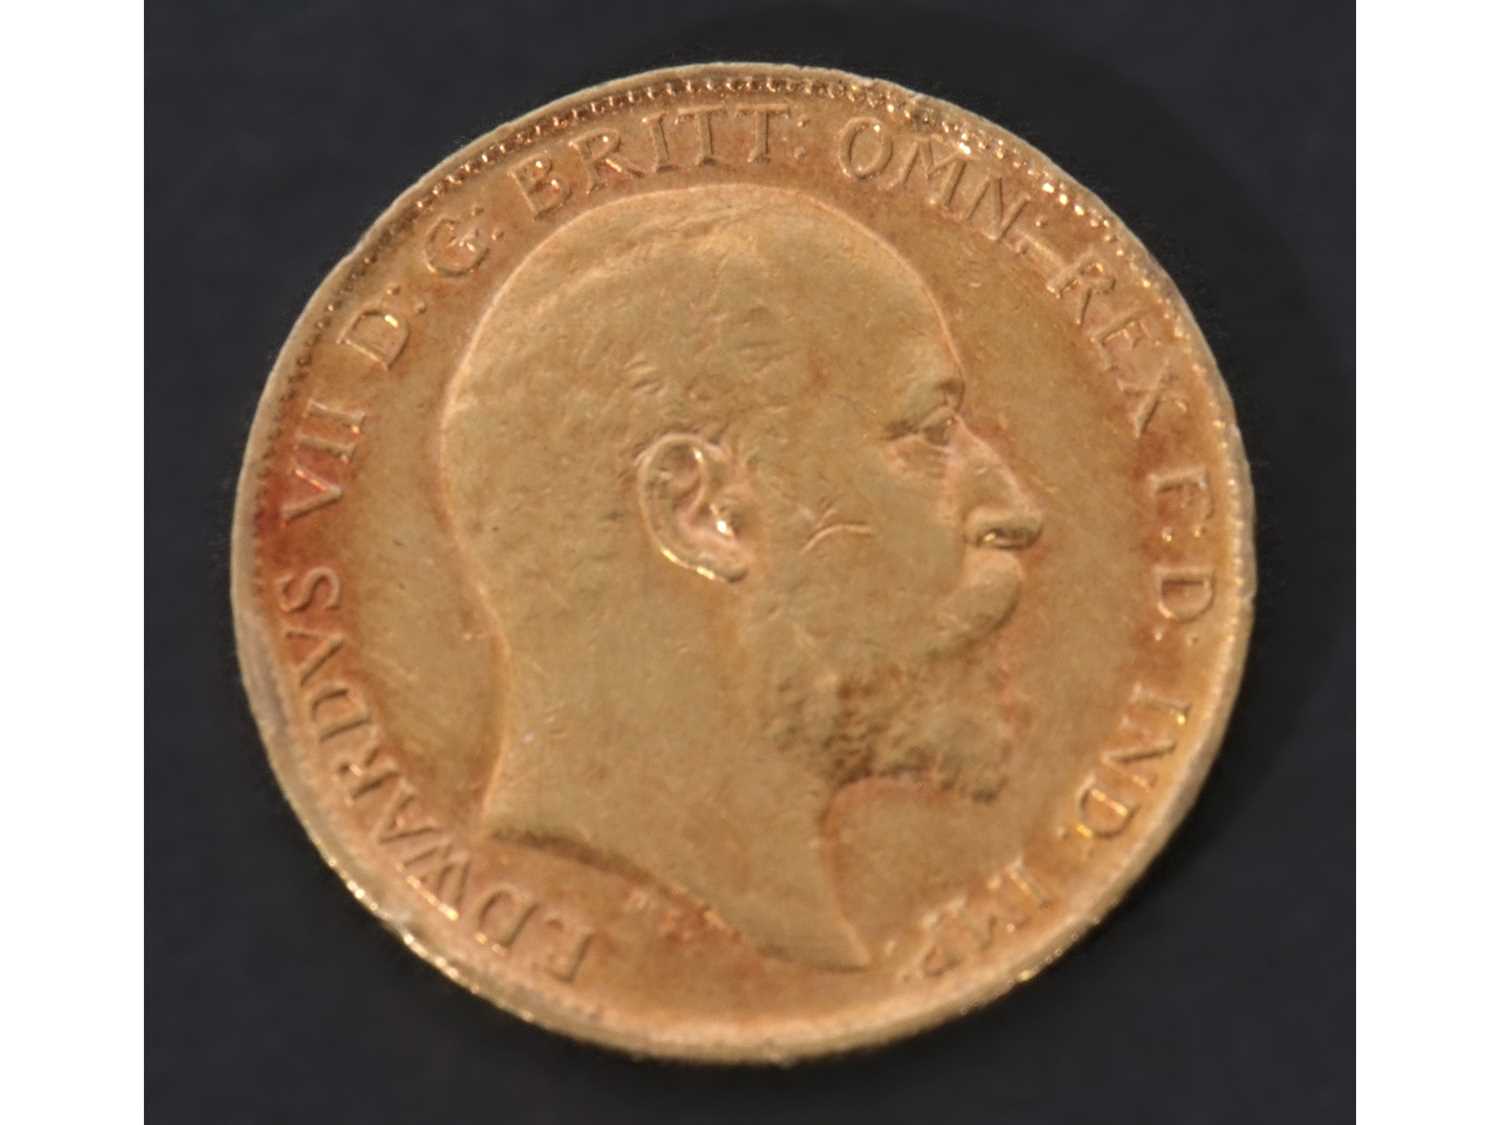 Lot 240 - Edward VII gold half sovereign dated 1902